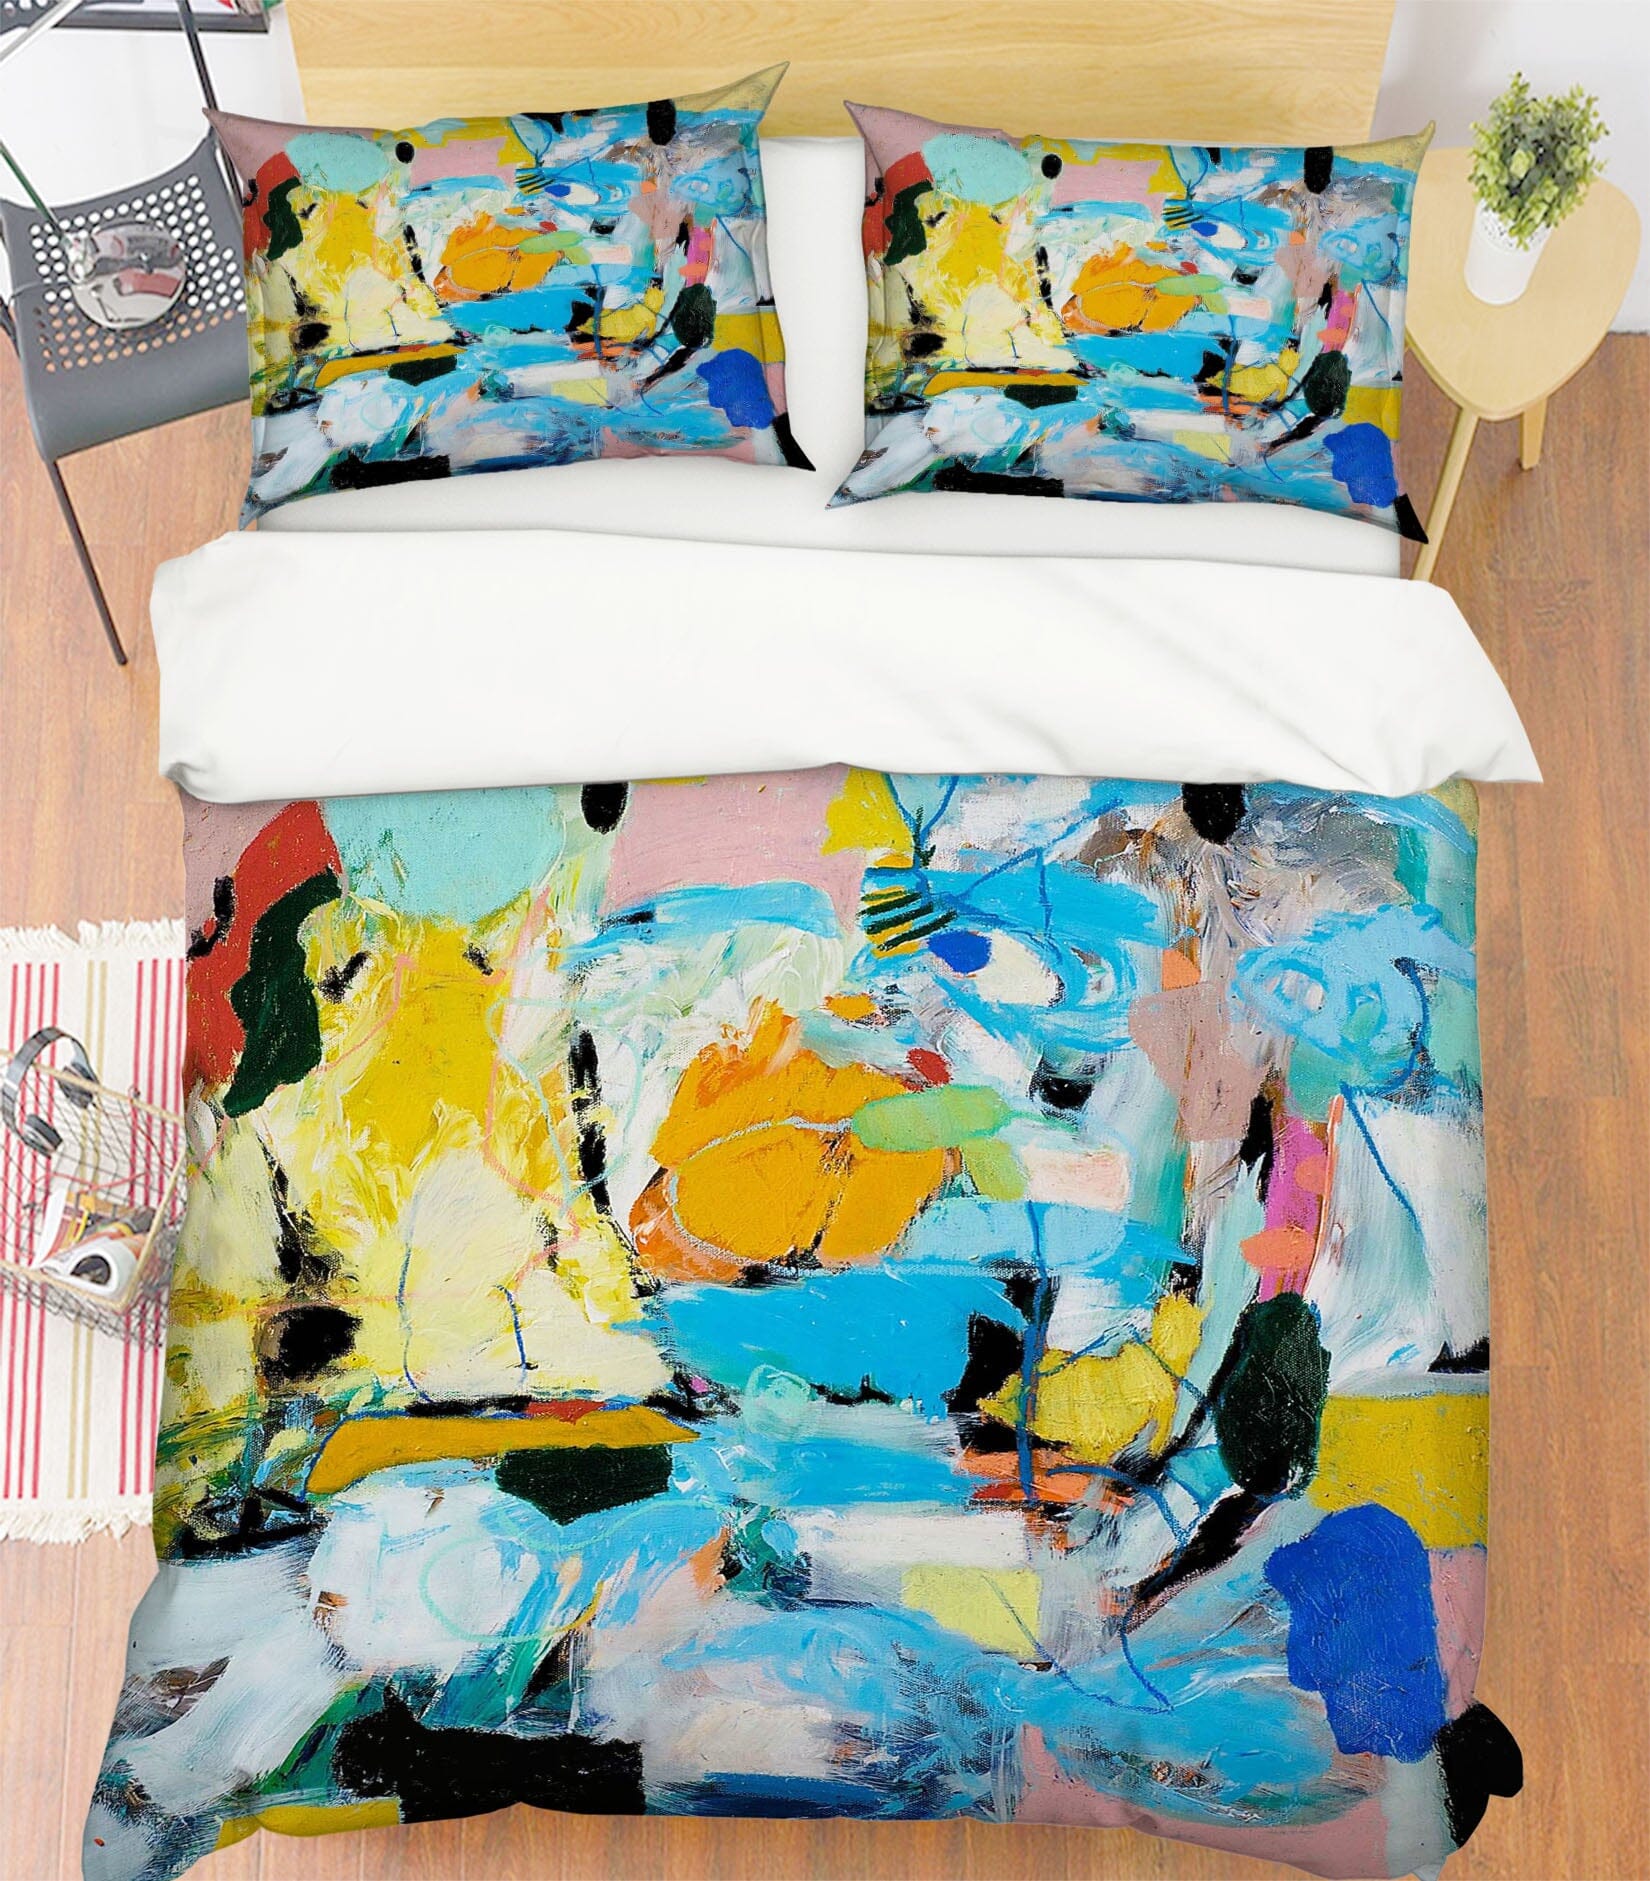 3D Vibrant Colors 2008 Allan P. Friedlander Bedding Bed Pillowcases Quilt Quiet Covers AJ Creativity Home 